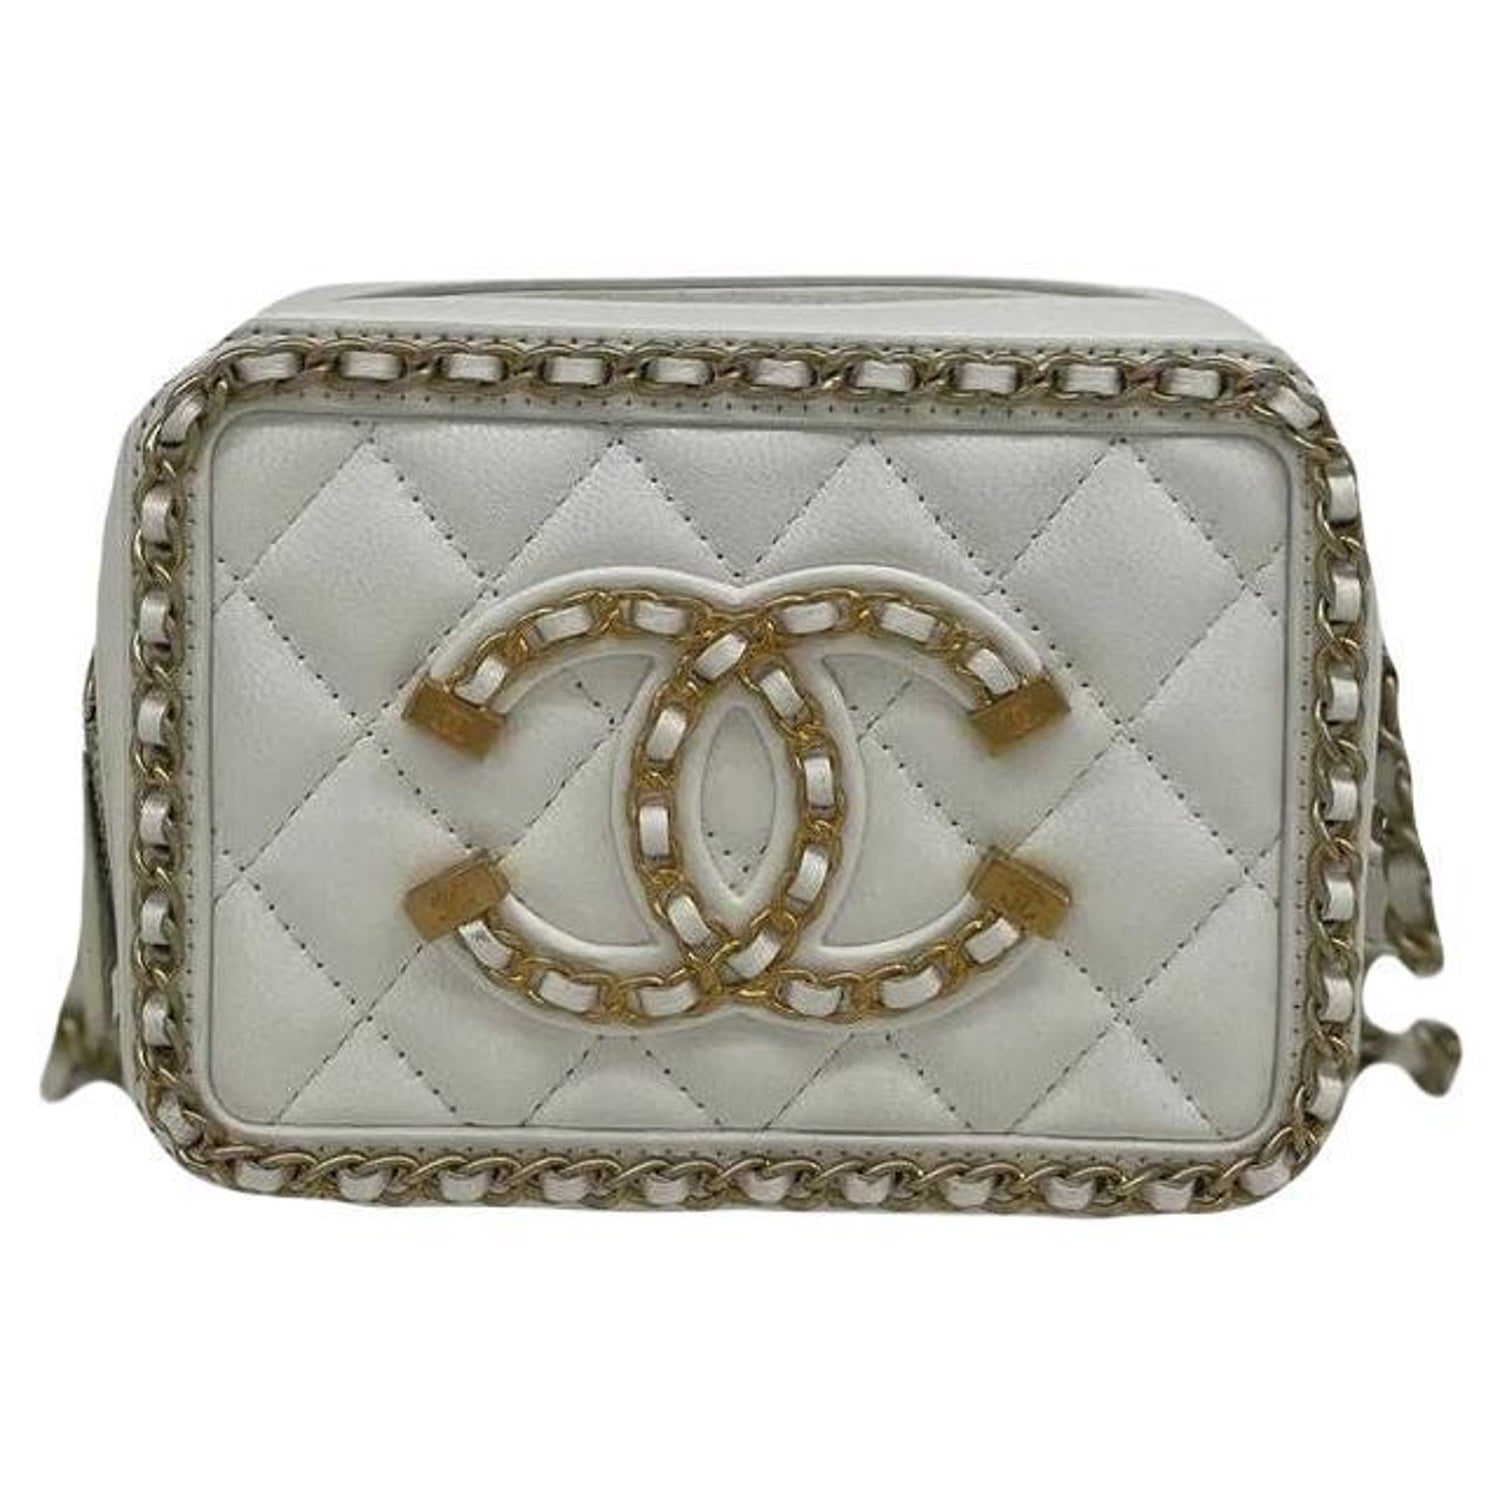 Premier Designer Bags - Chanel - Mini Flaps - Page 2 - Timeless